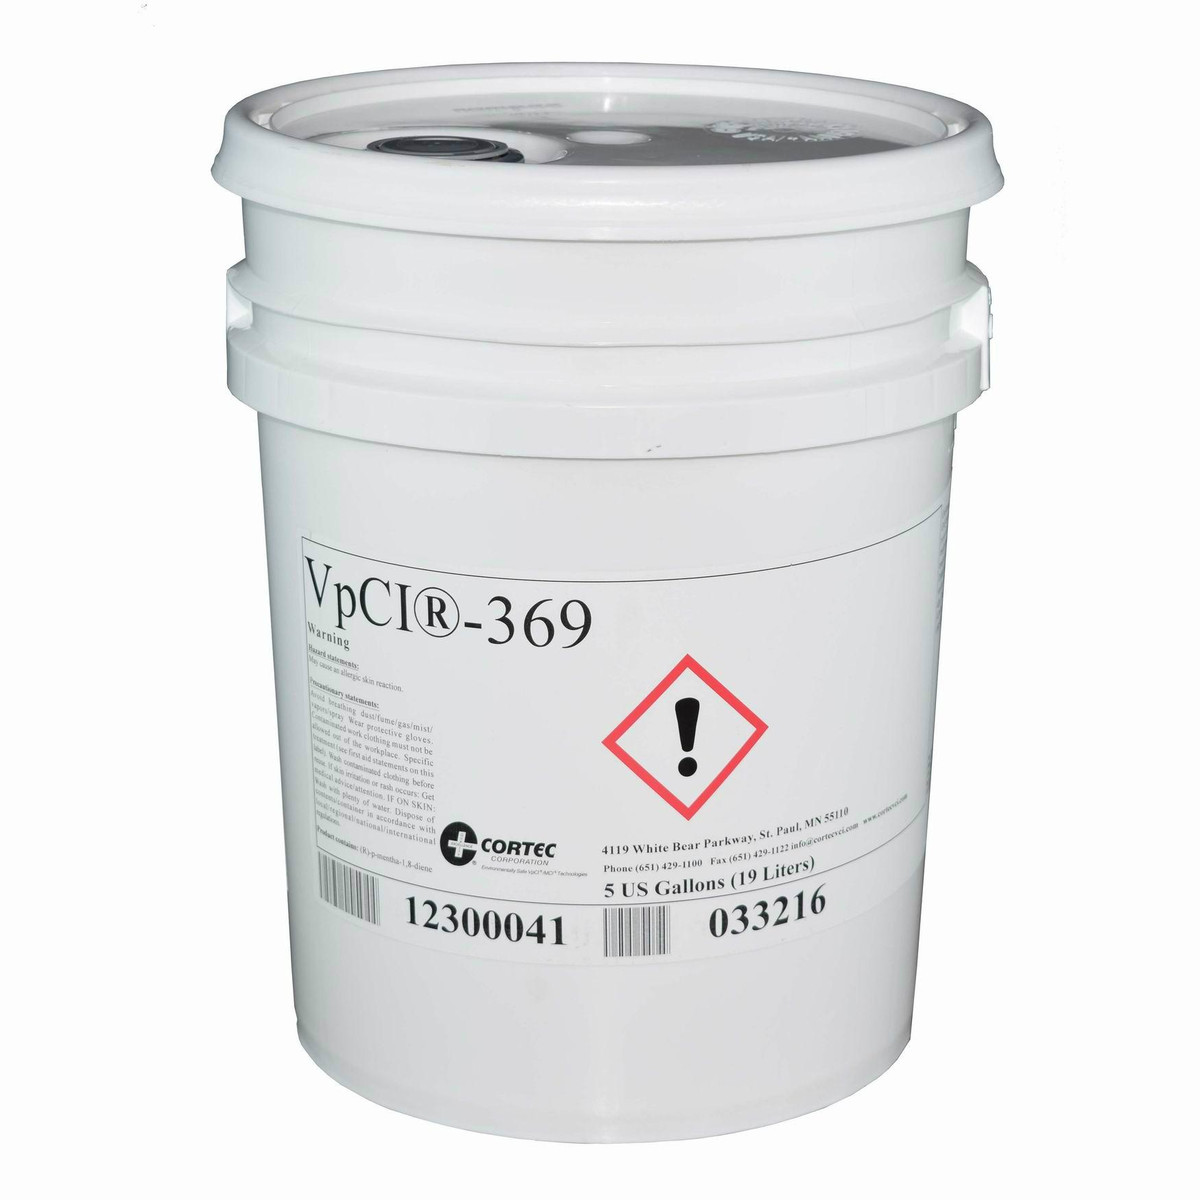 vpci-369 oil based rust preventive